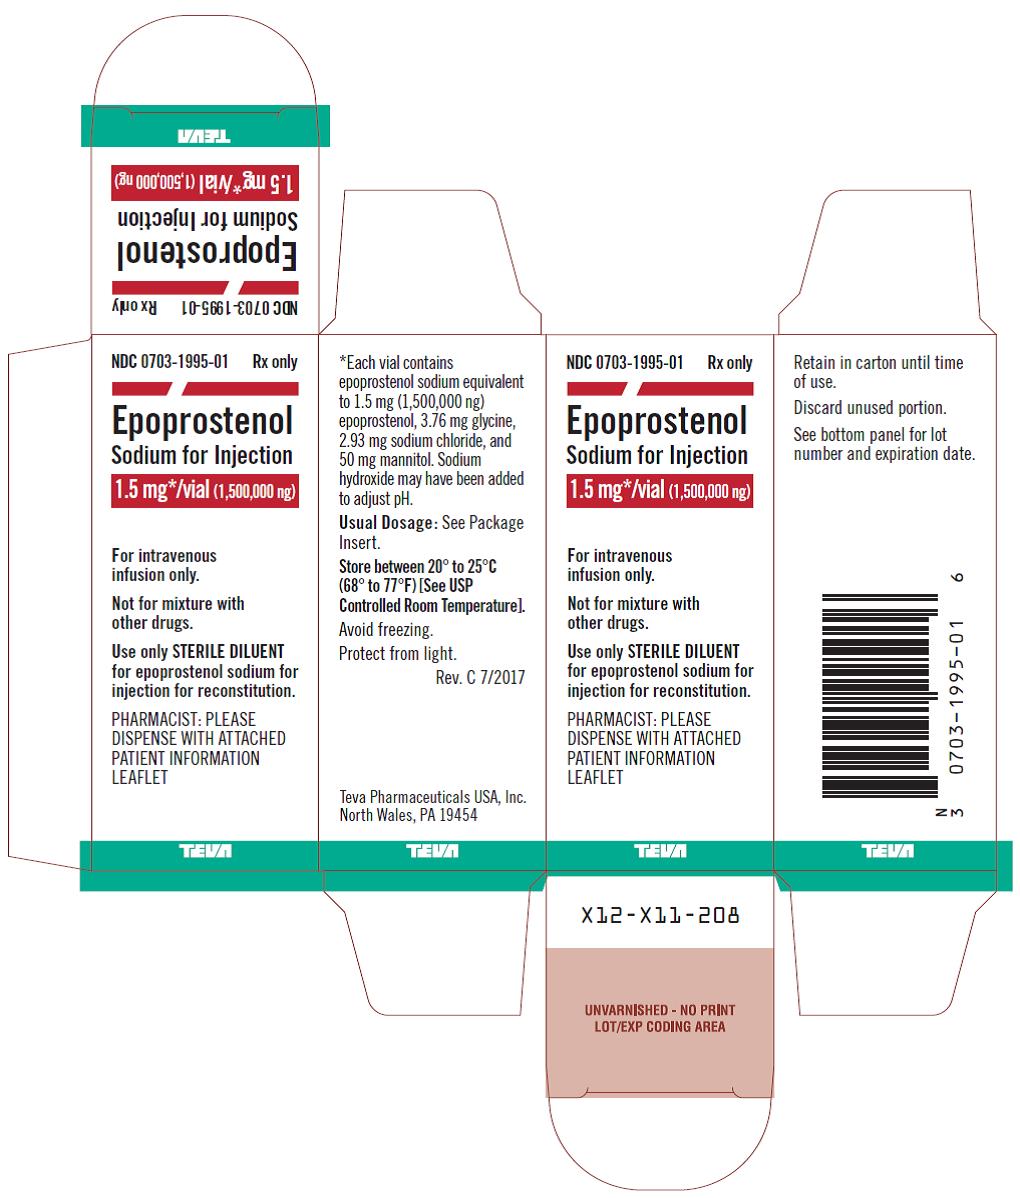 Epoprostenol Sodium for Injection 1.5 mgvial, Carton